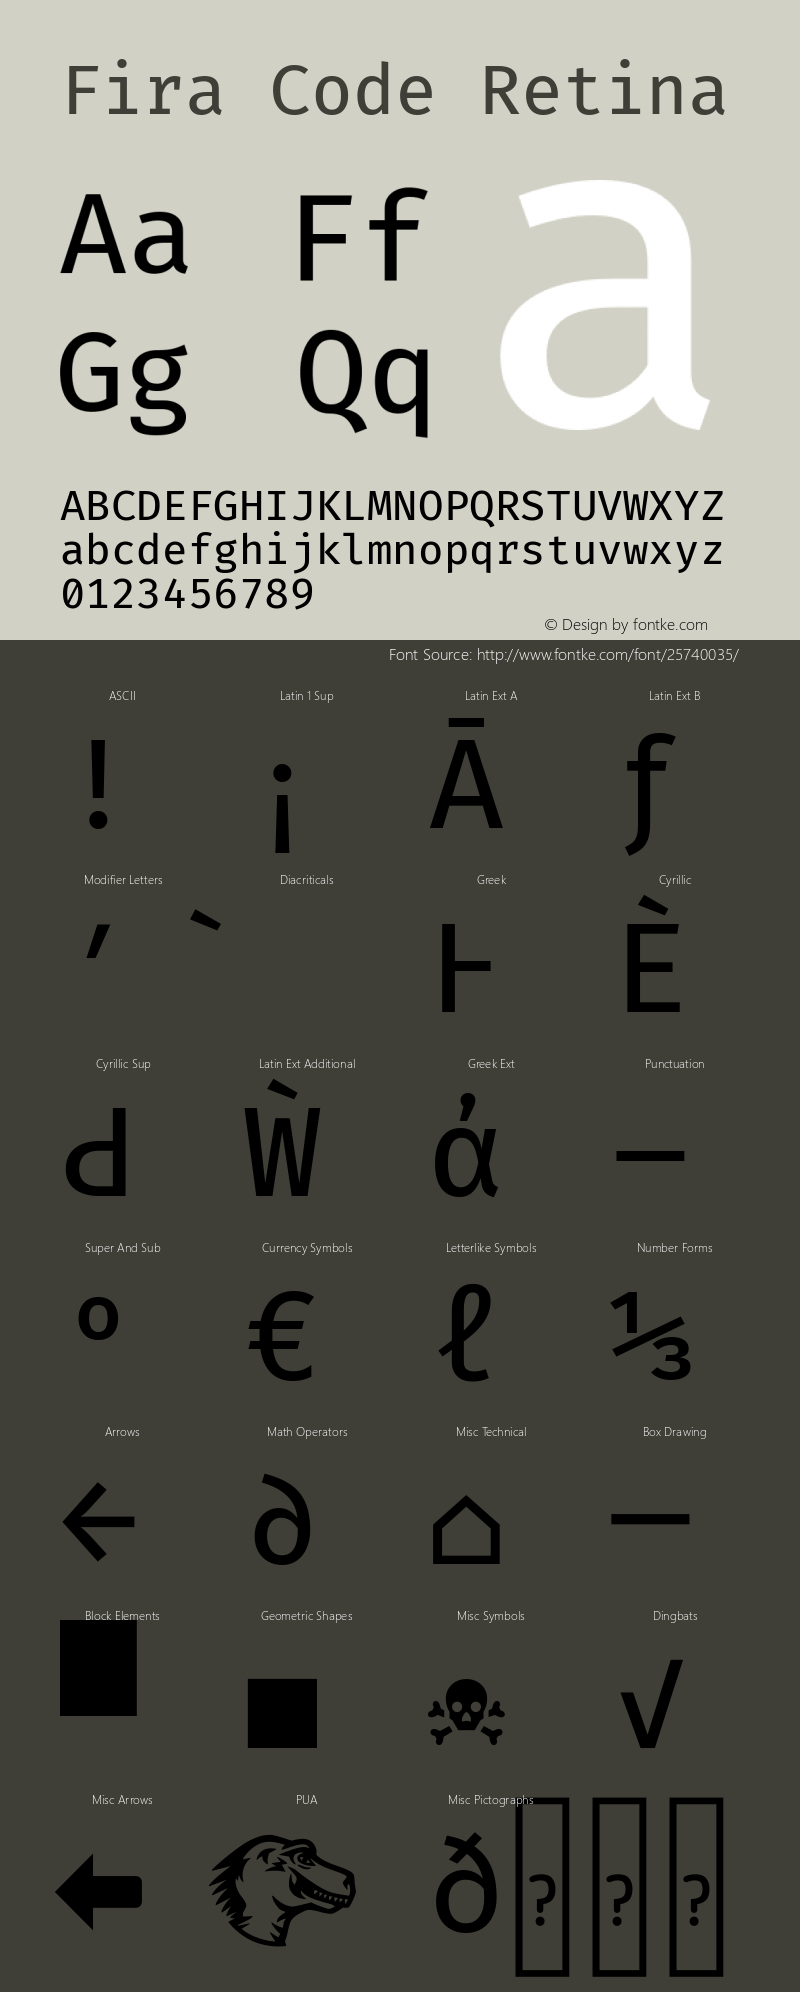 Fira Code Retina Version 1.205 Font Sample